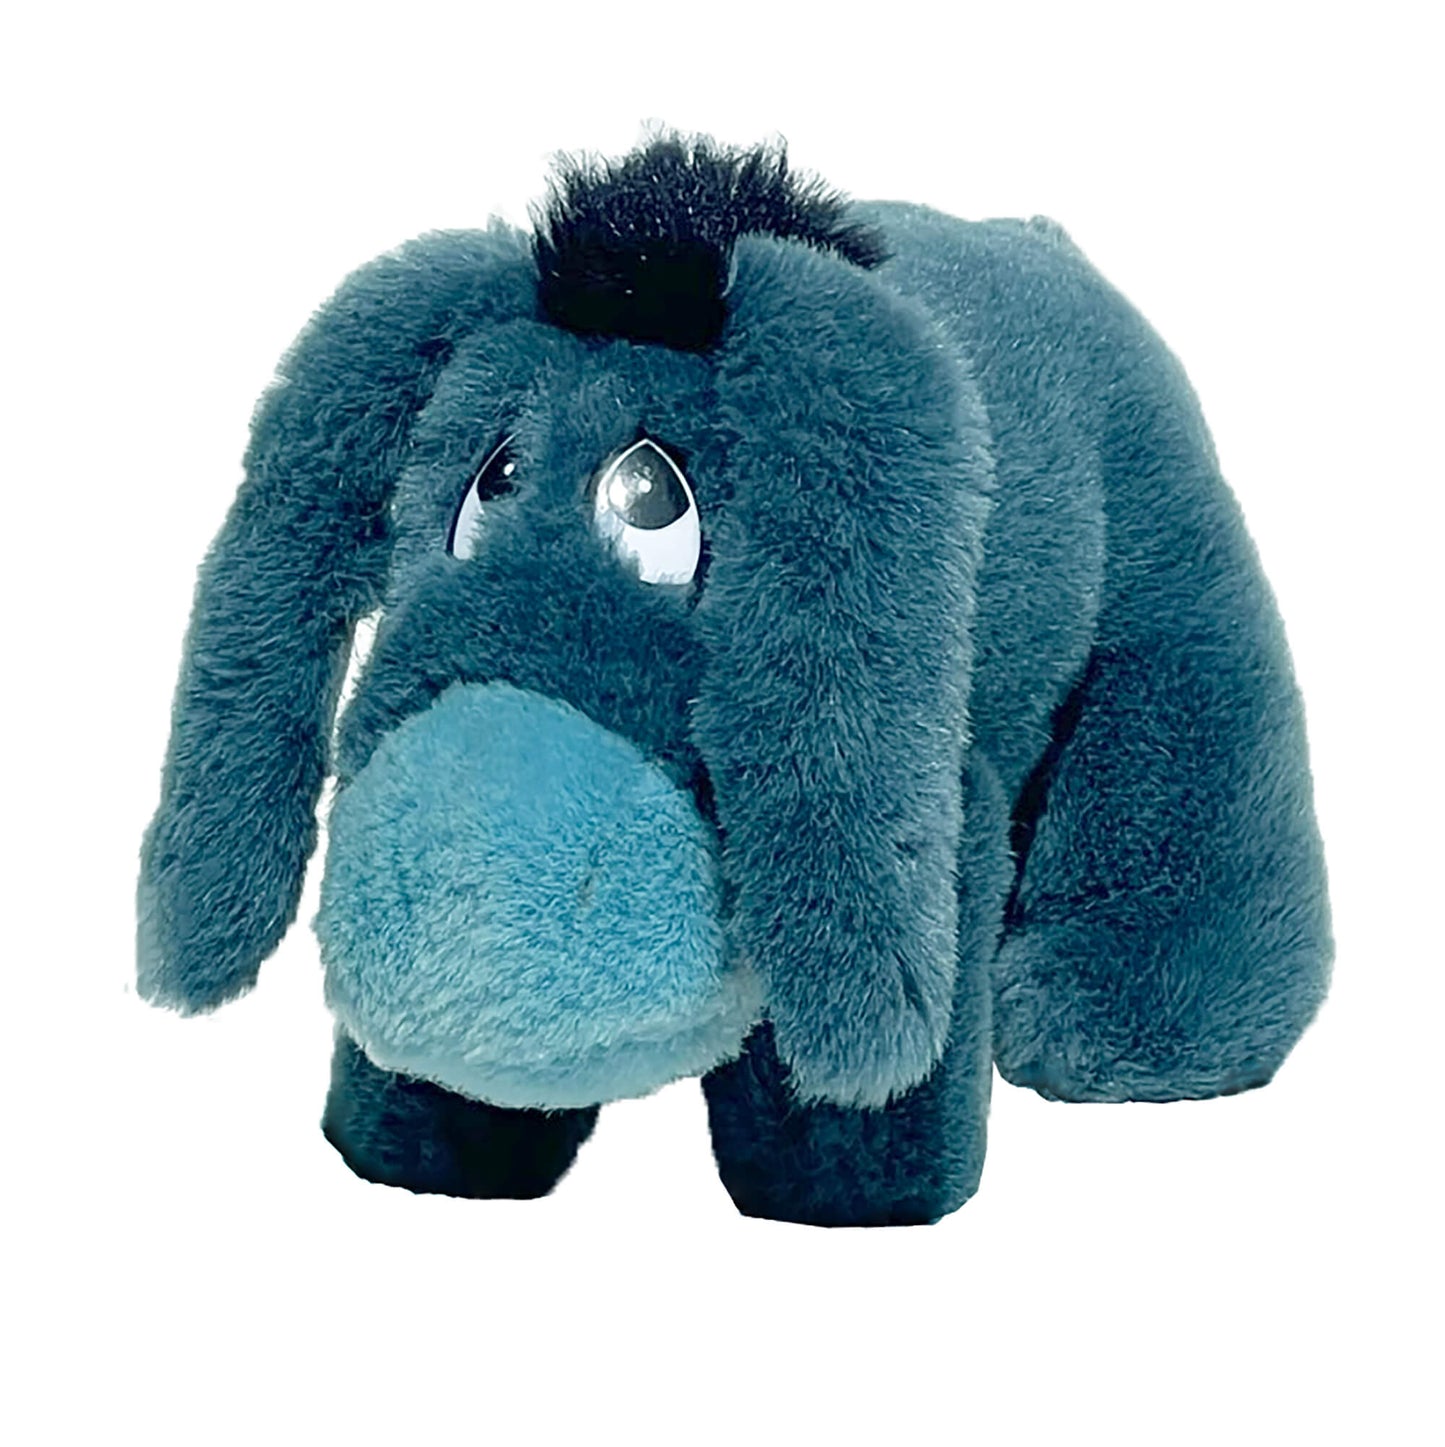 GUND-Walt-Disney-Eeyore-Plush-Stuffed-Donkey-Close-up-view-toy